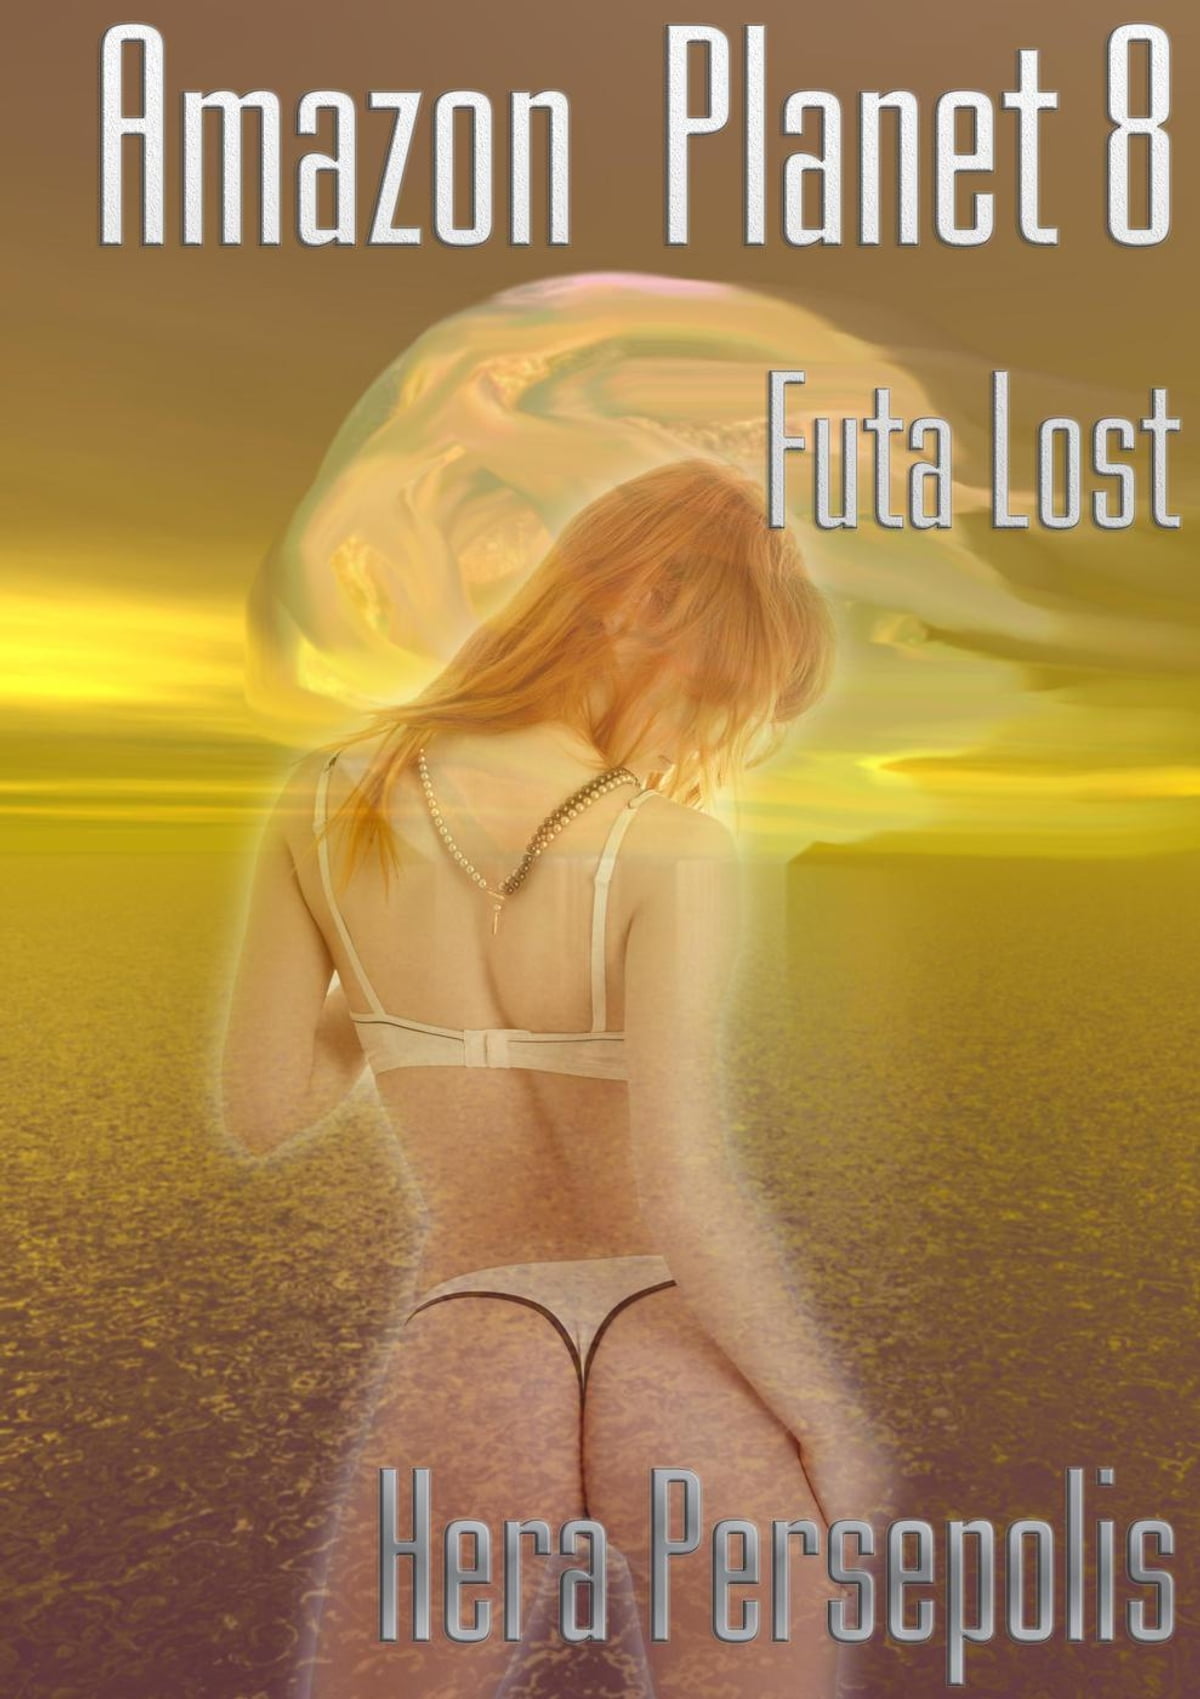 FLAK recommend best of lost love futa